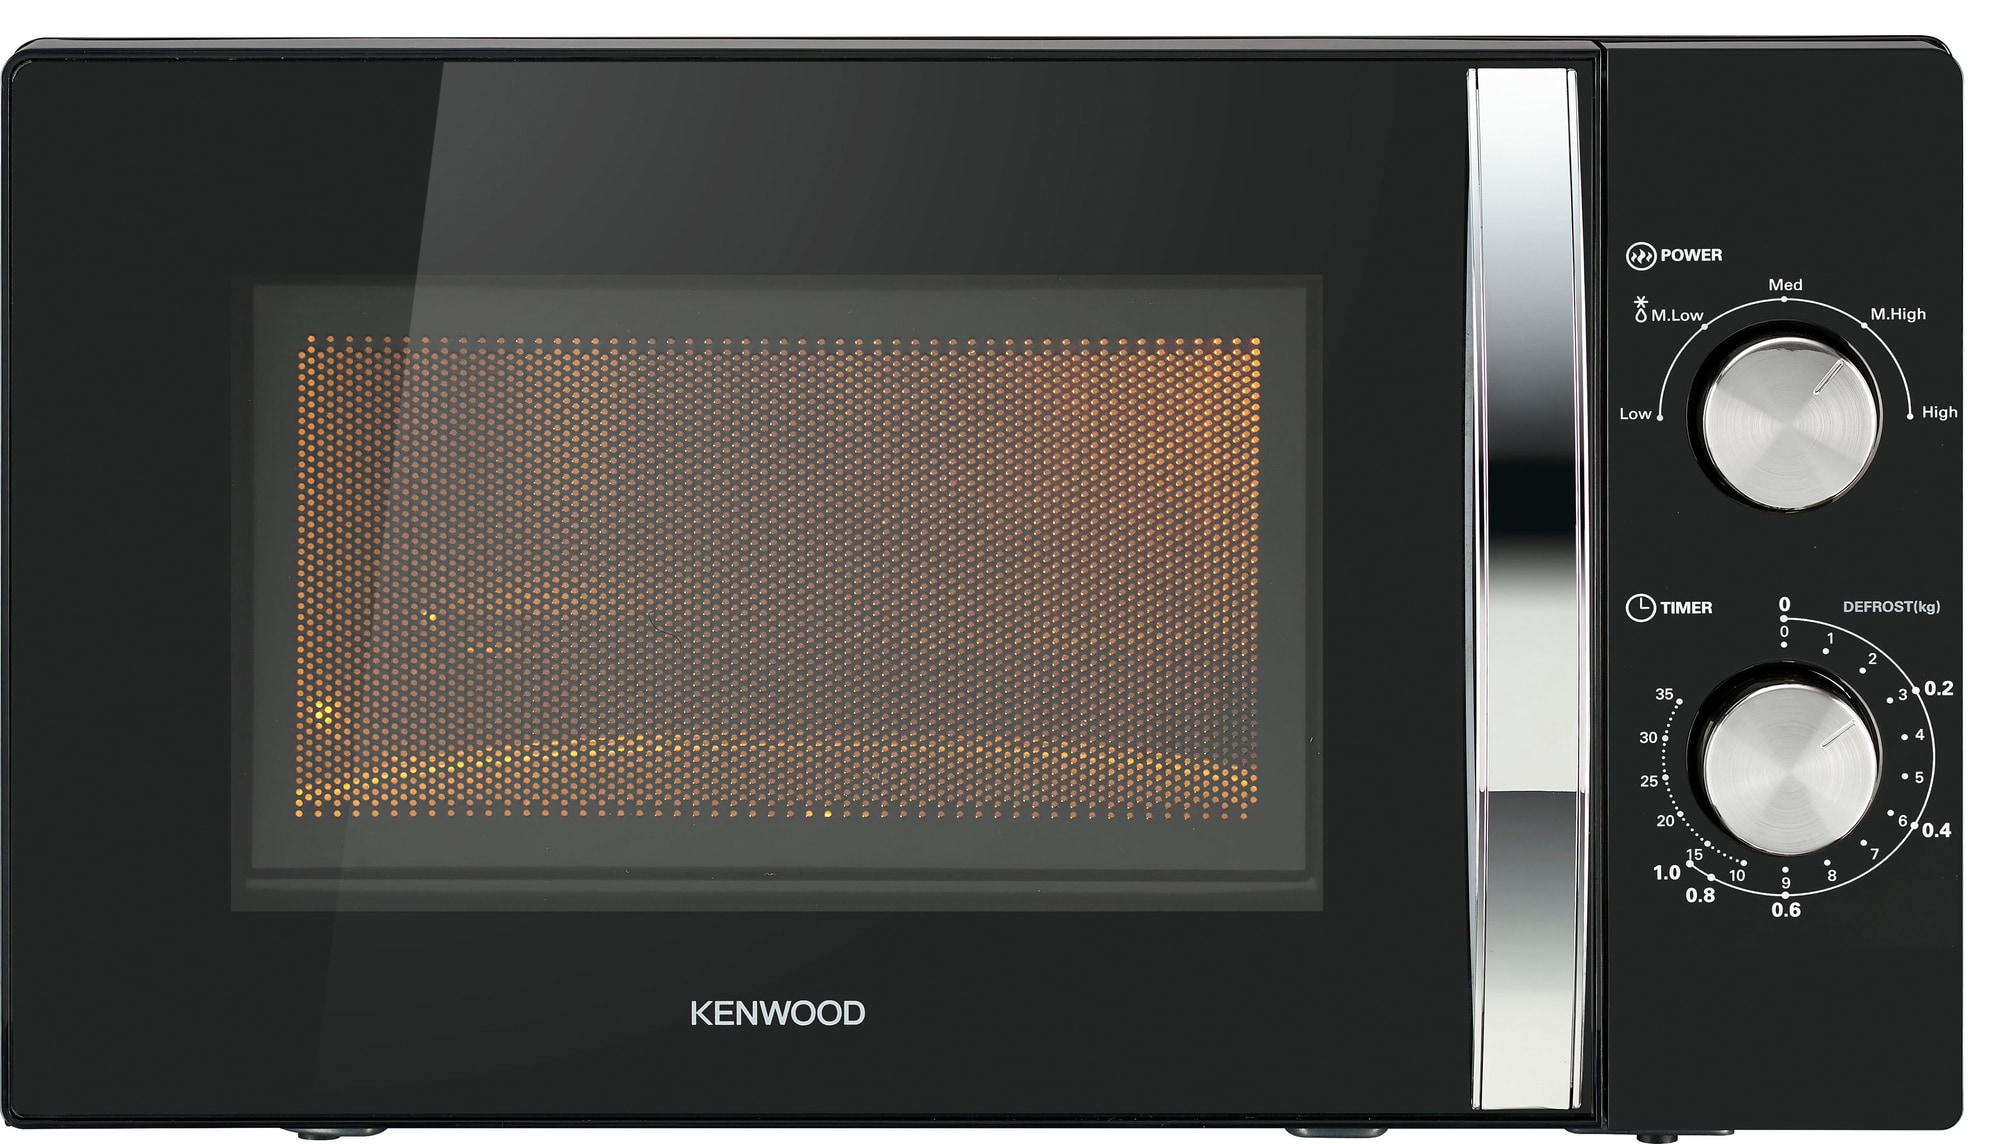 6: Kenwood mikroovn K20MB21E (sort)